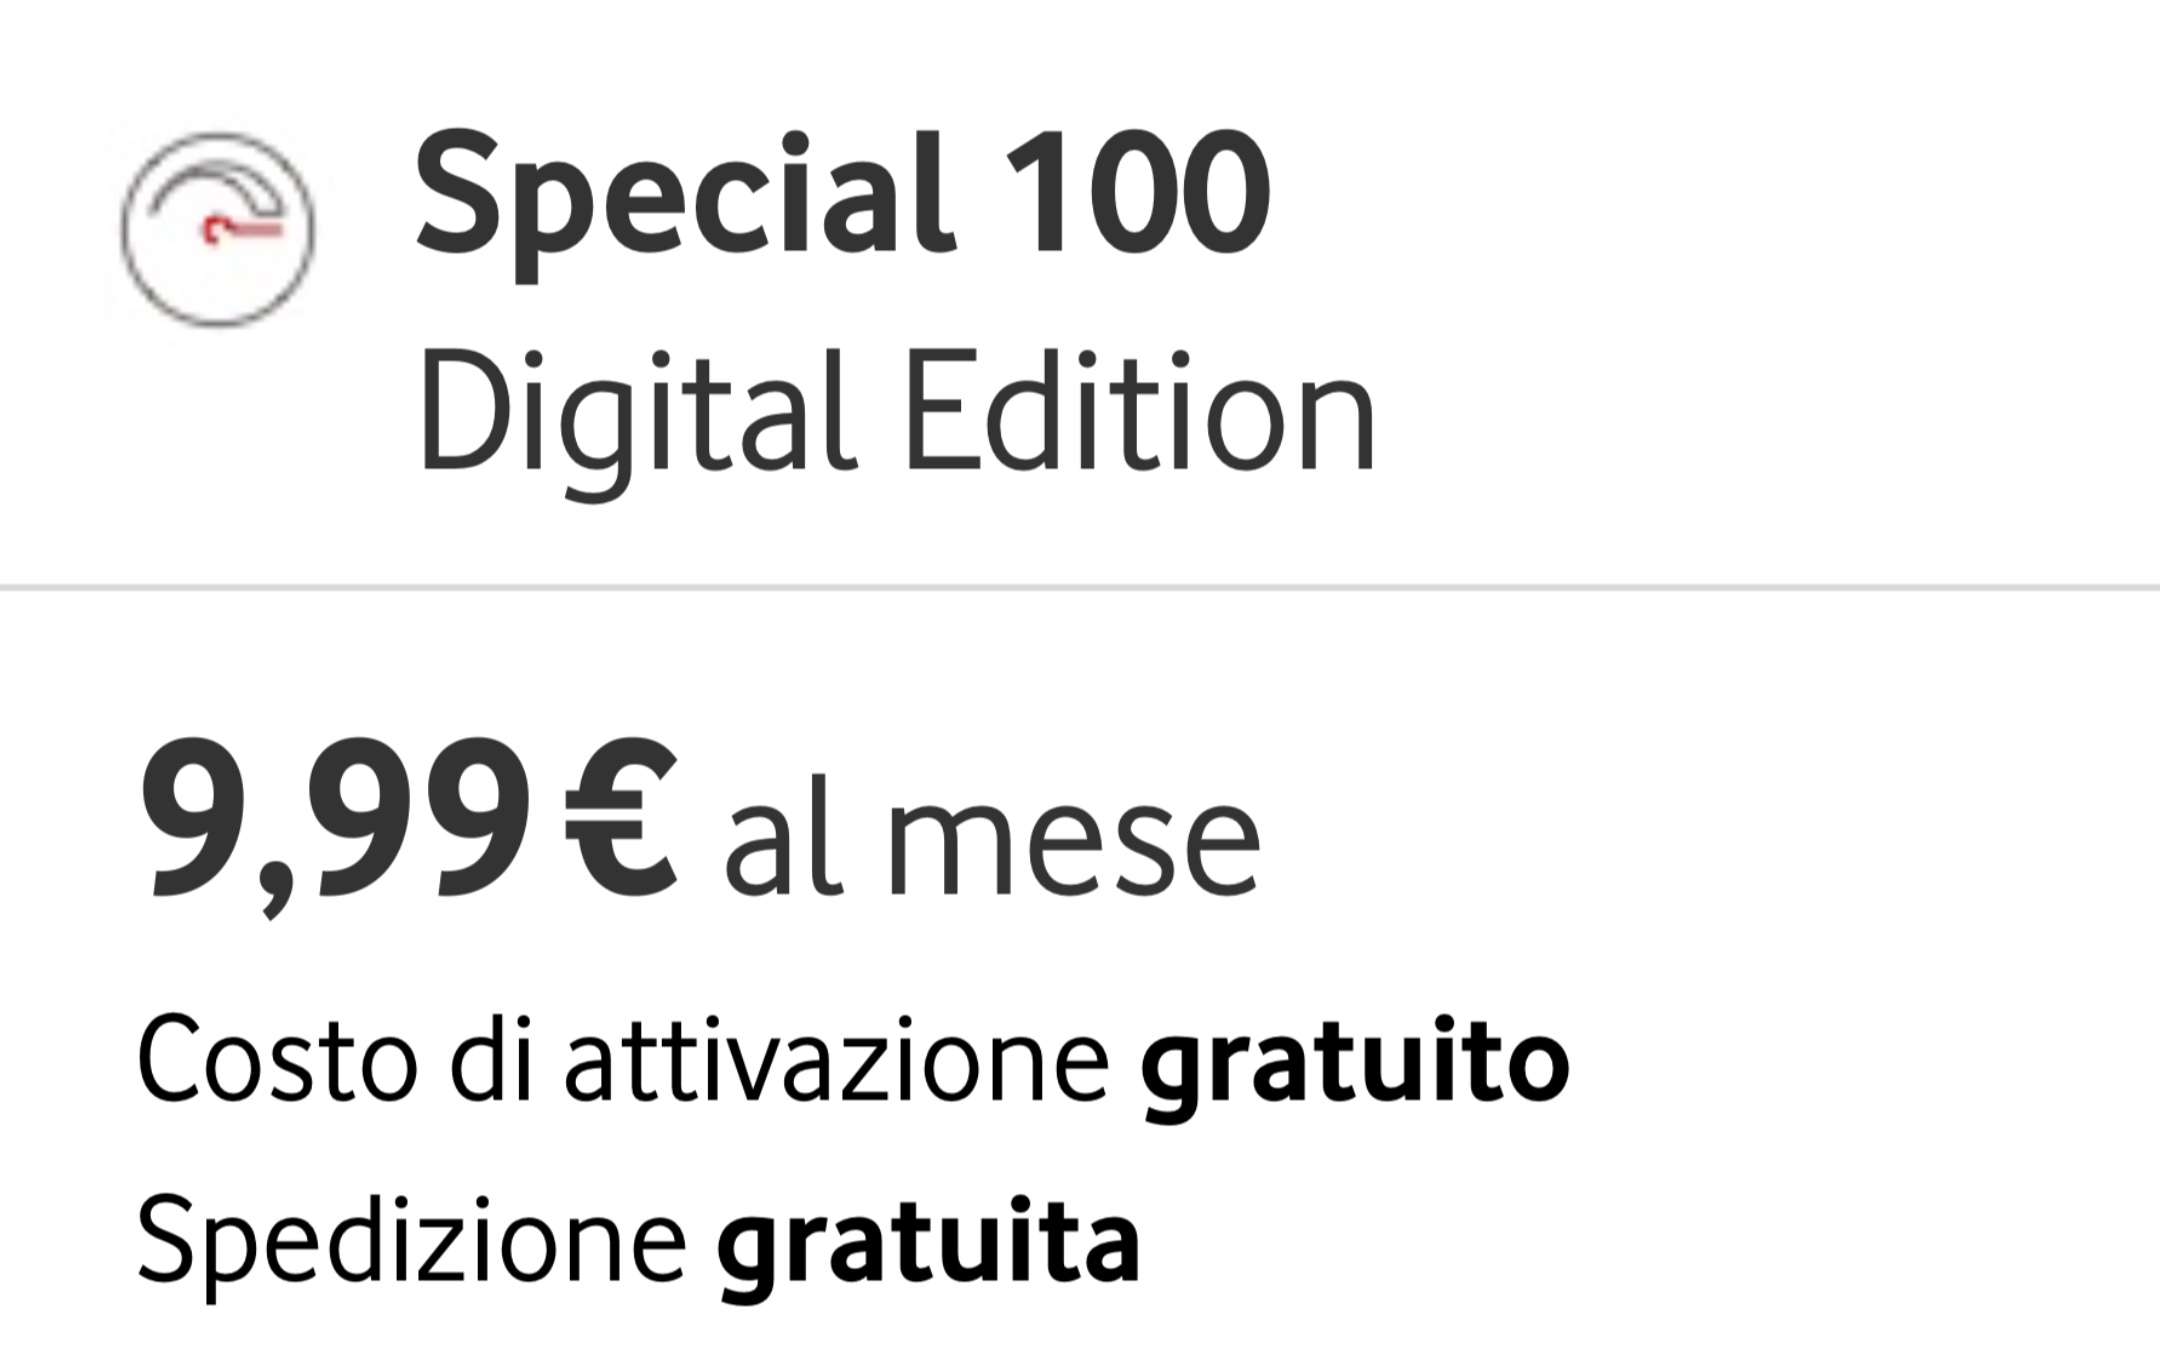 Special 100 Digital Edition: 100GB a 9,99€ al mese